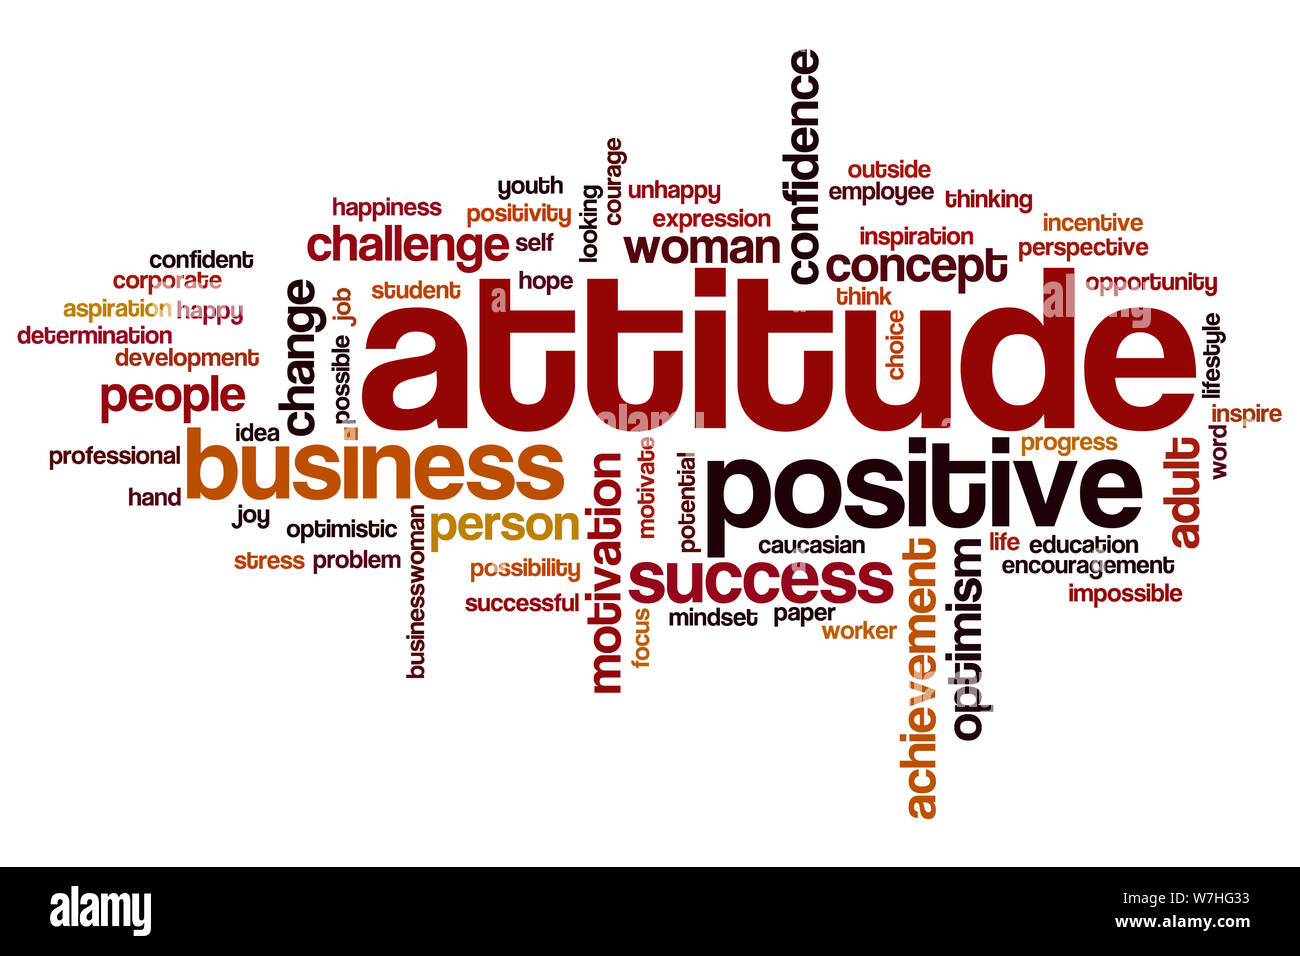 Attitude word cloud concept Stock Photo